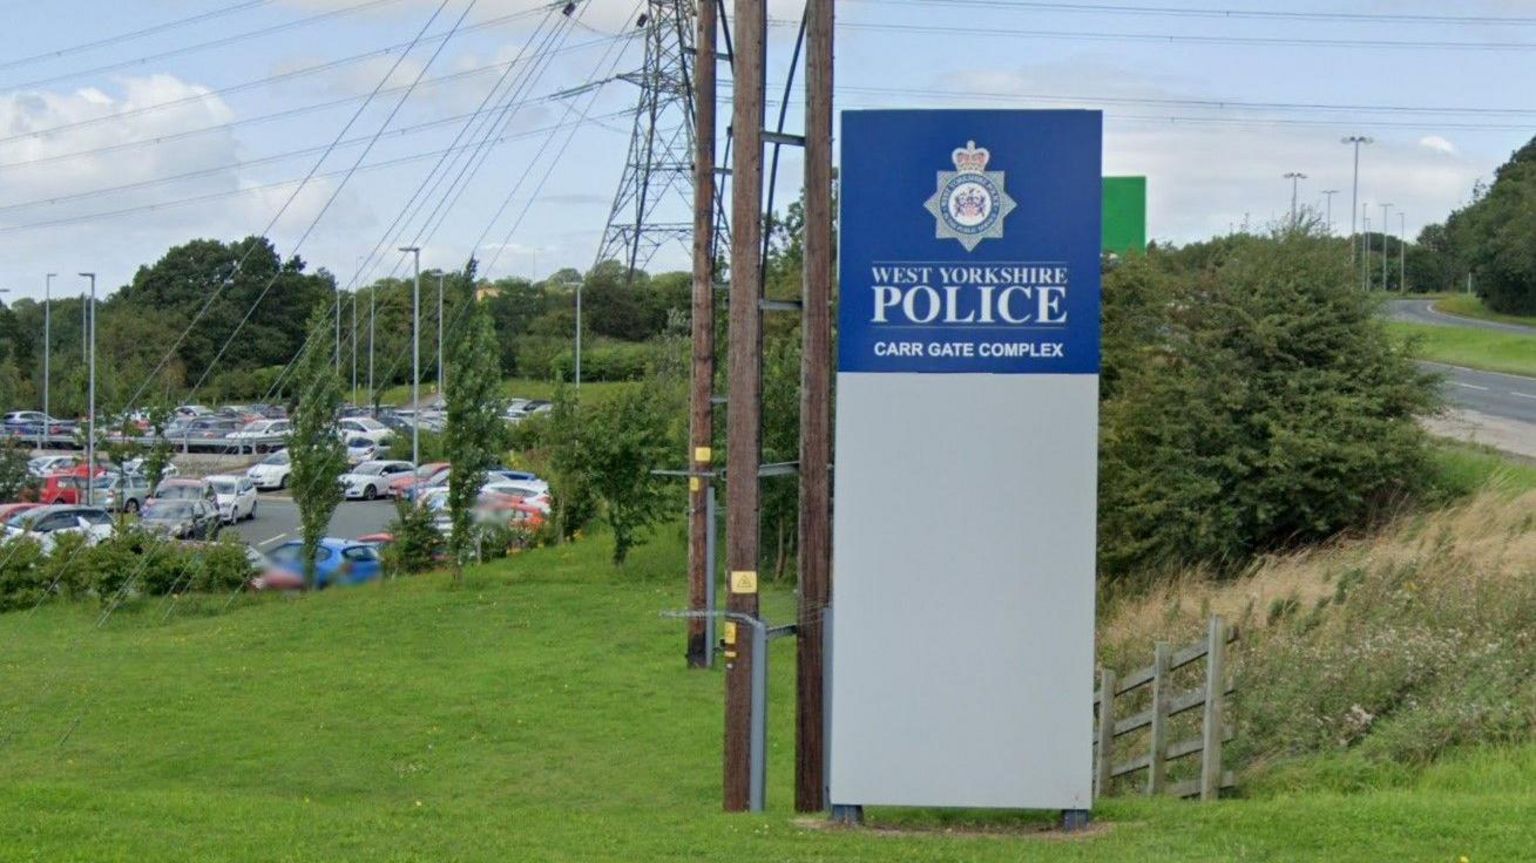 Carr Gate Police training centre